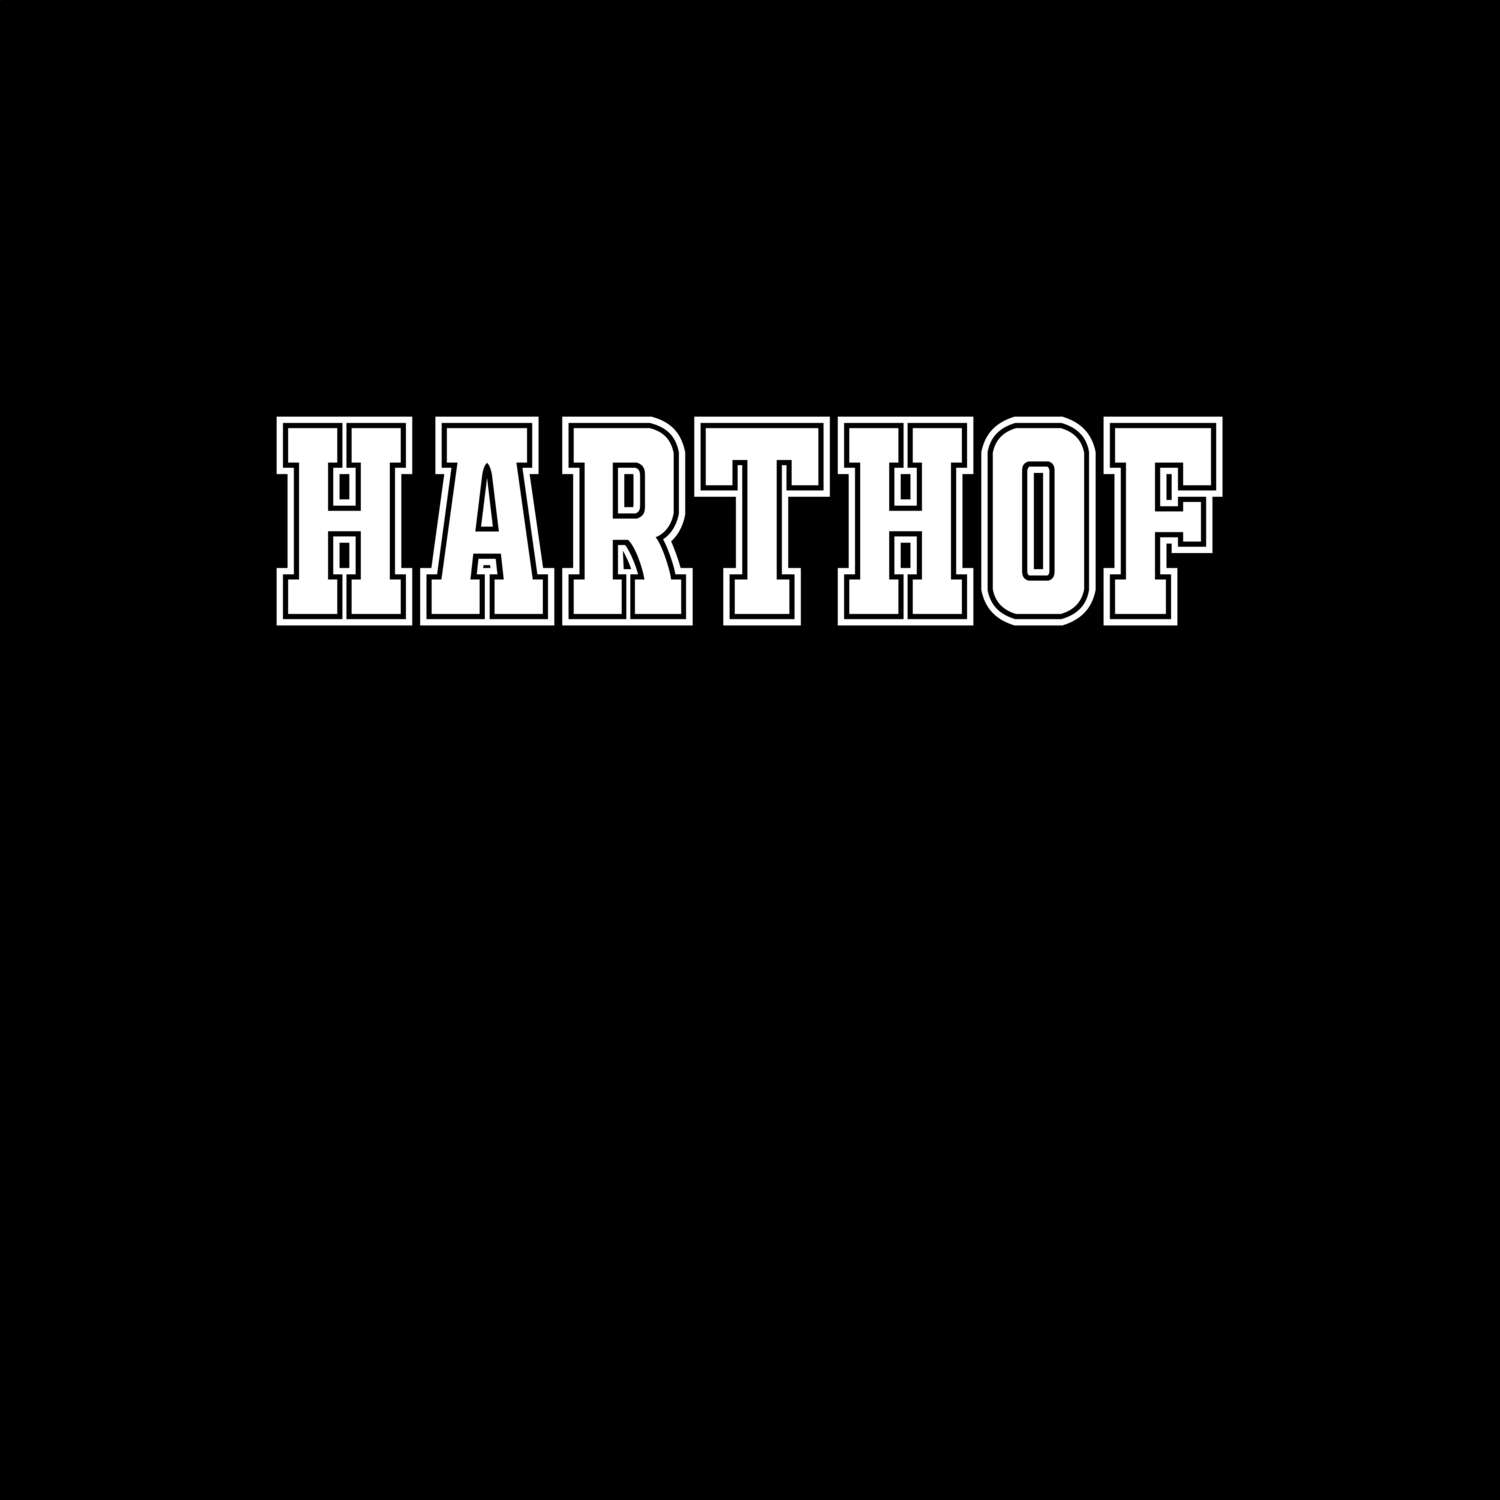 Harthof T-Shirt »Classic«